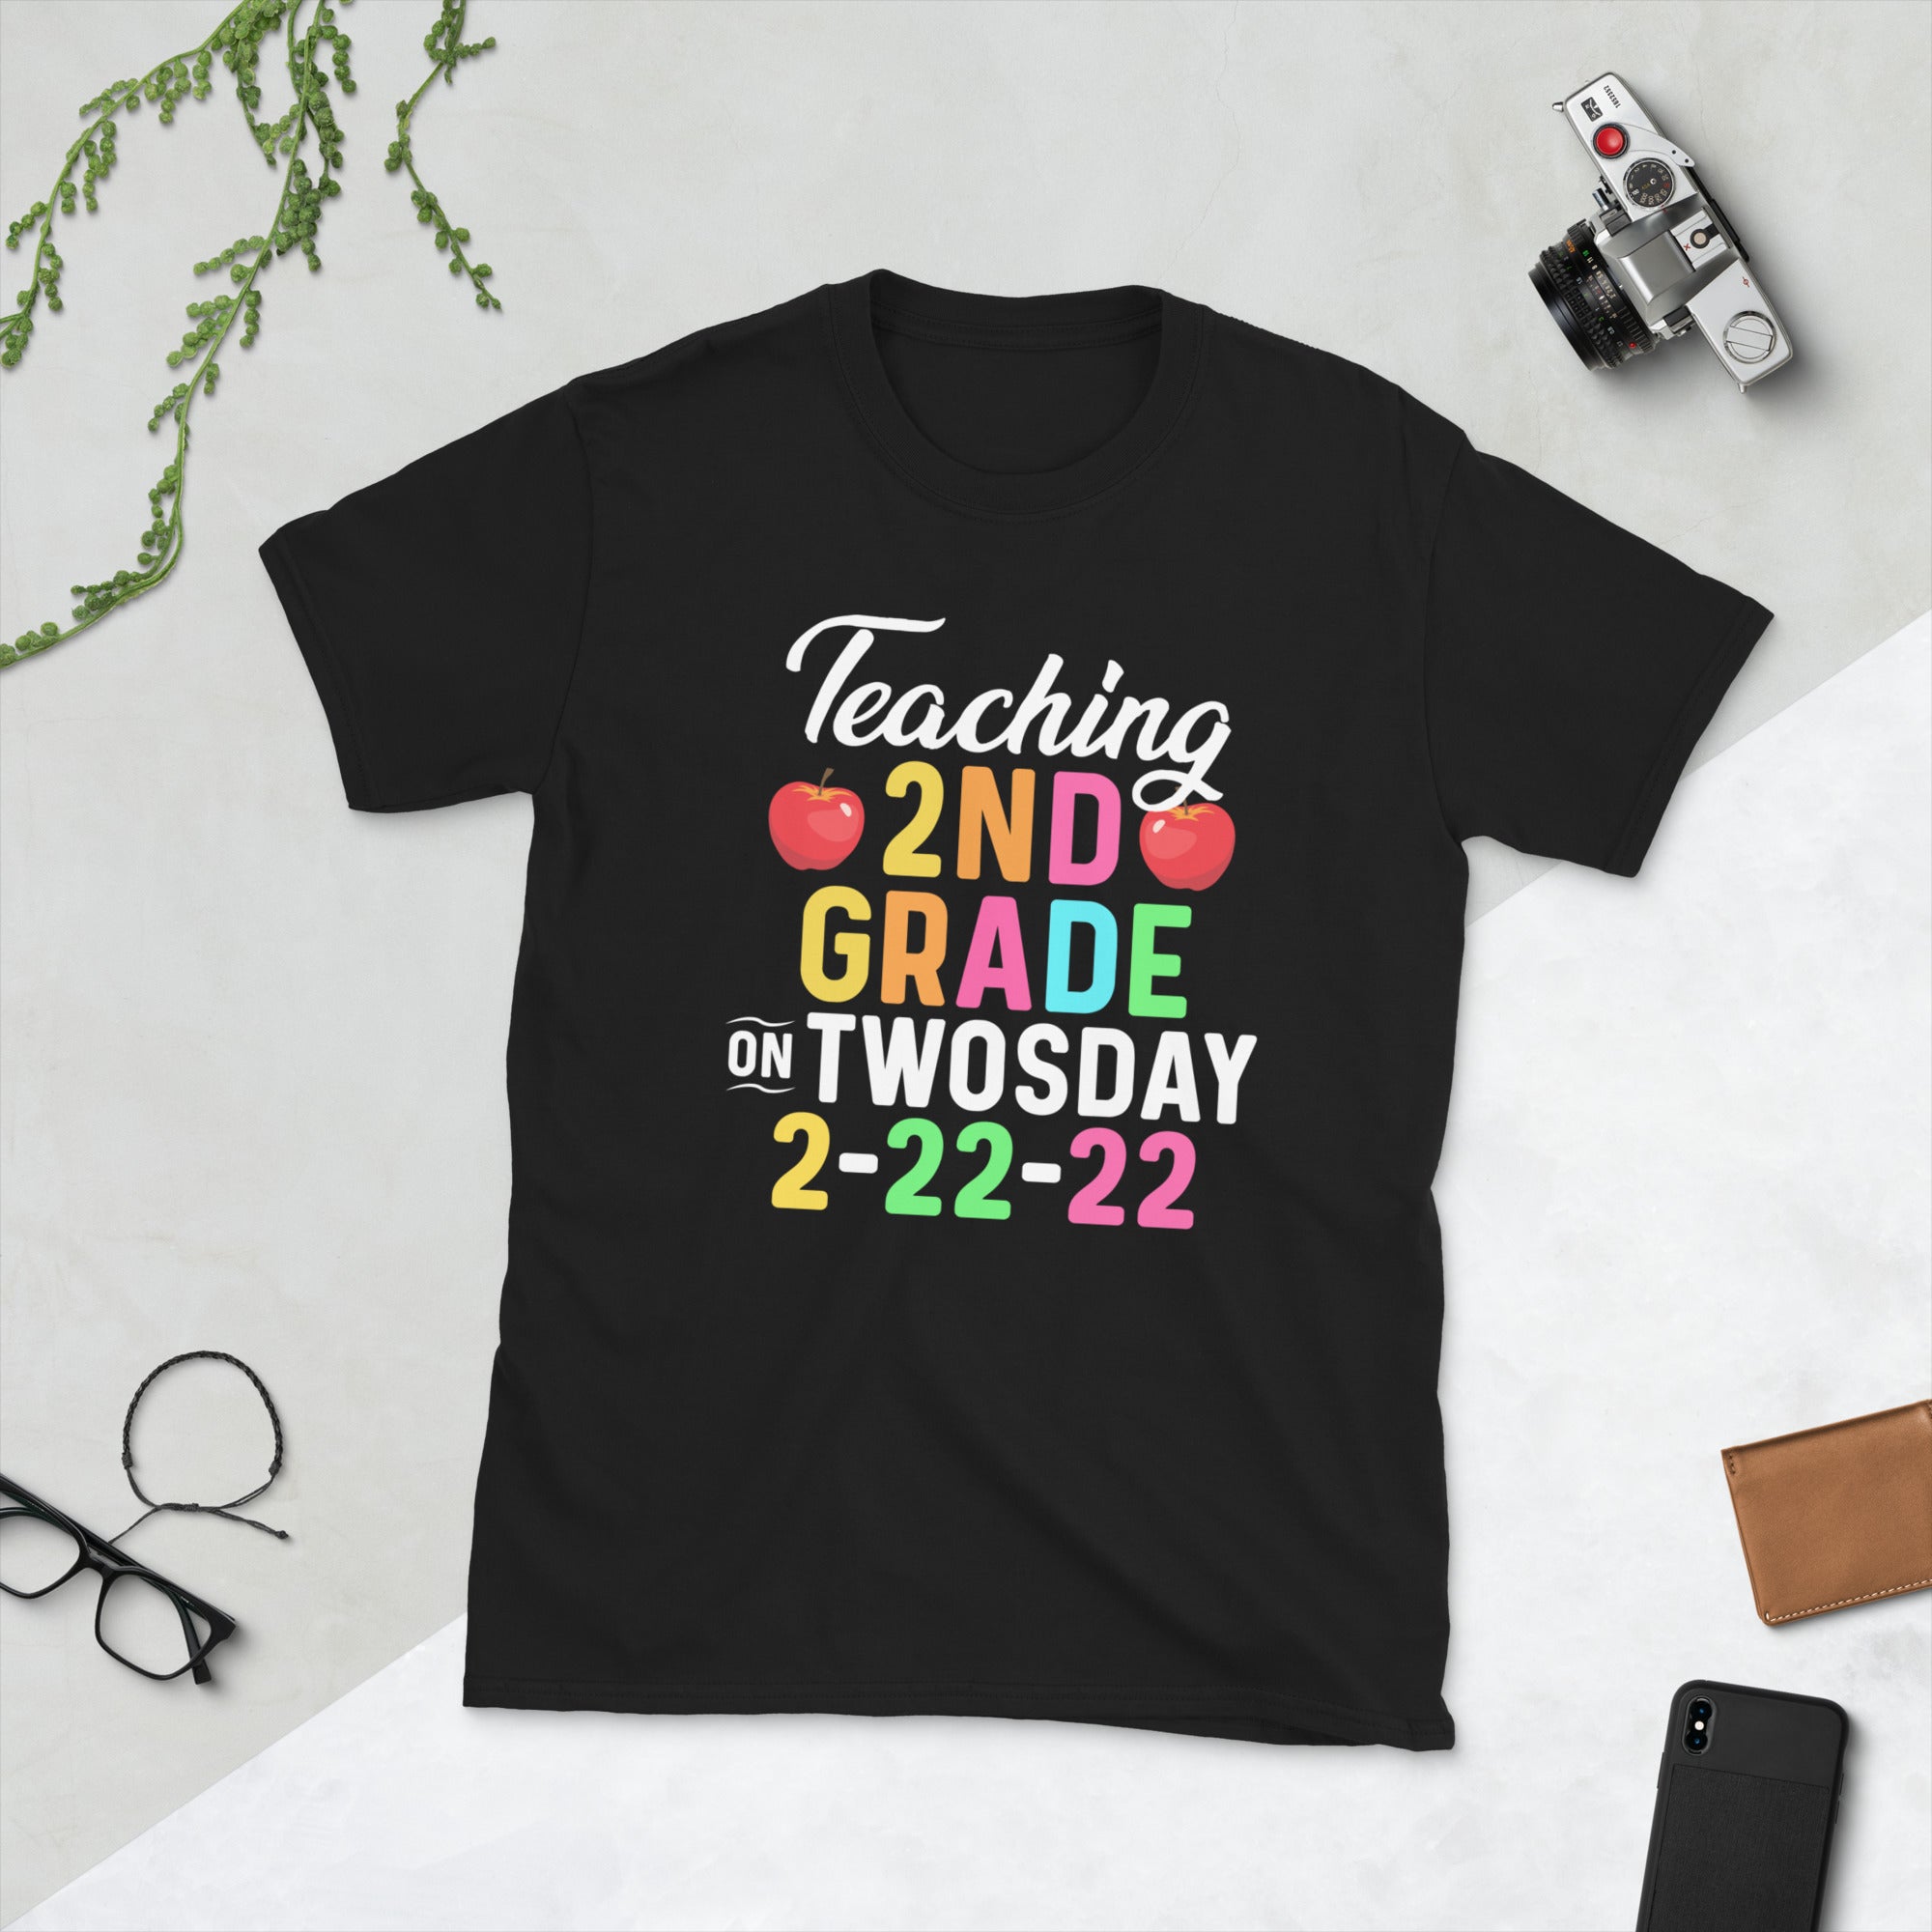 Teaching 2nd Grade On Twosday, Twosday Shirt, 2nd Grade Teacher Tshirt, Tuesday 2-22-22, Funny Twosday Tee, Math Teacher, Numerology Gifts - Madeinsea©